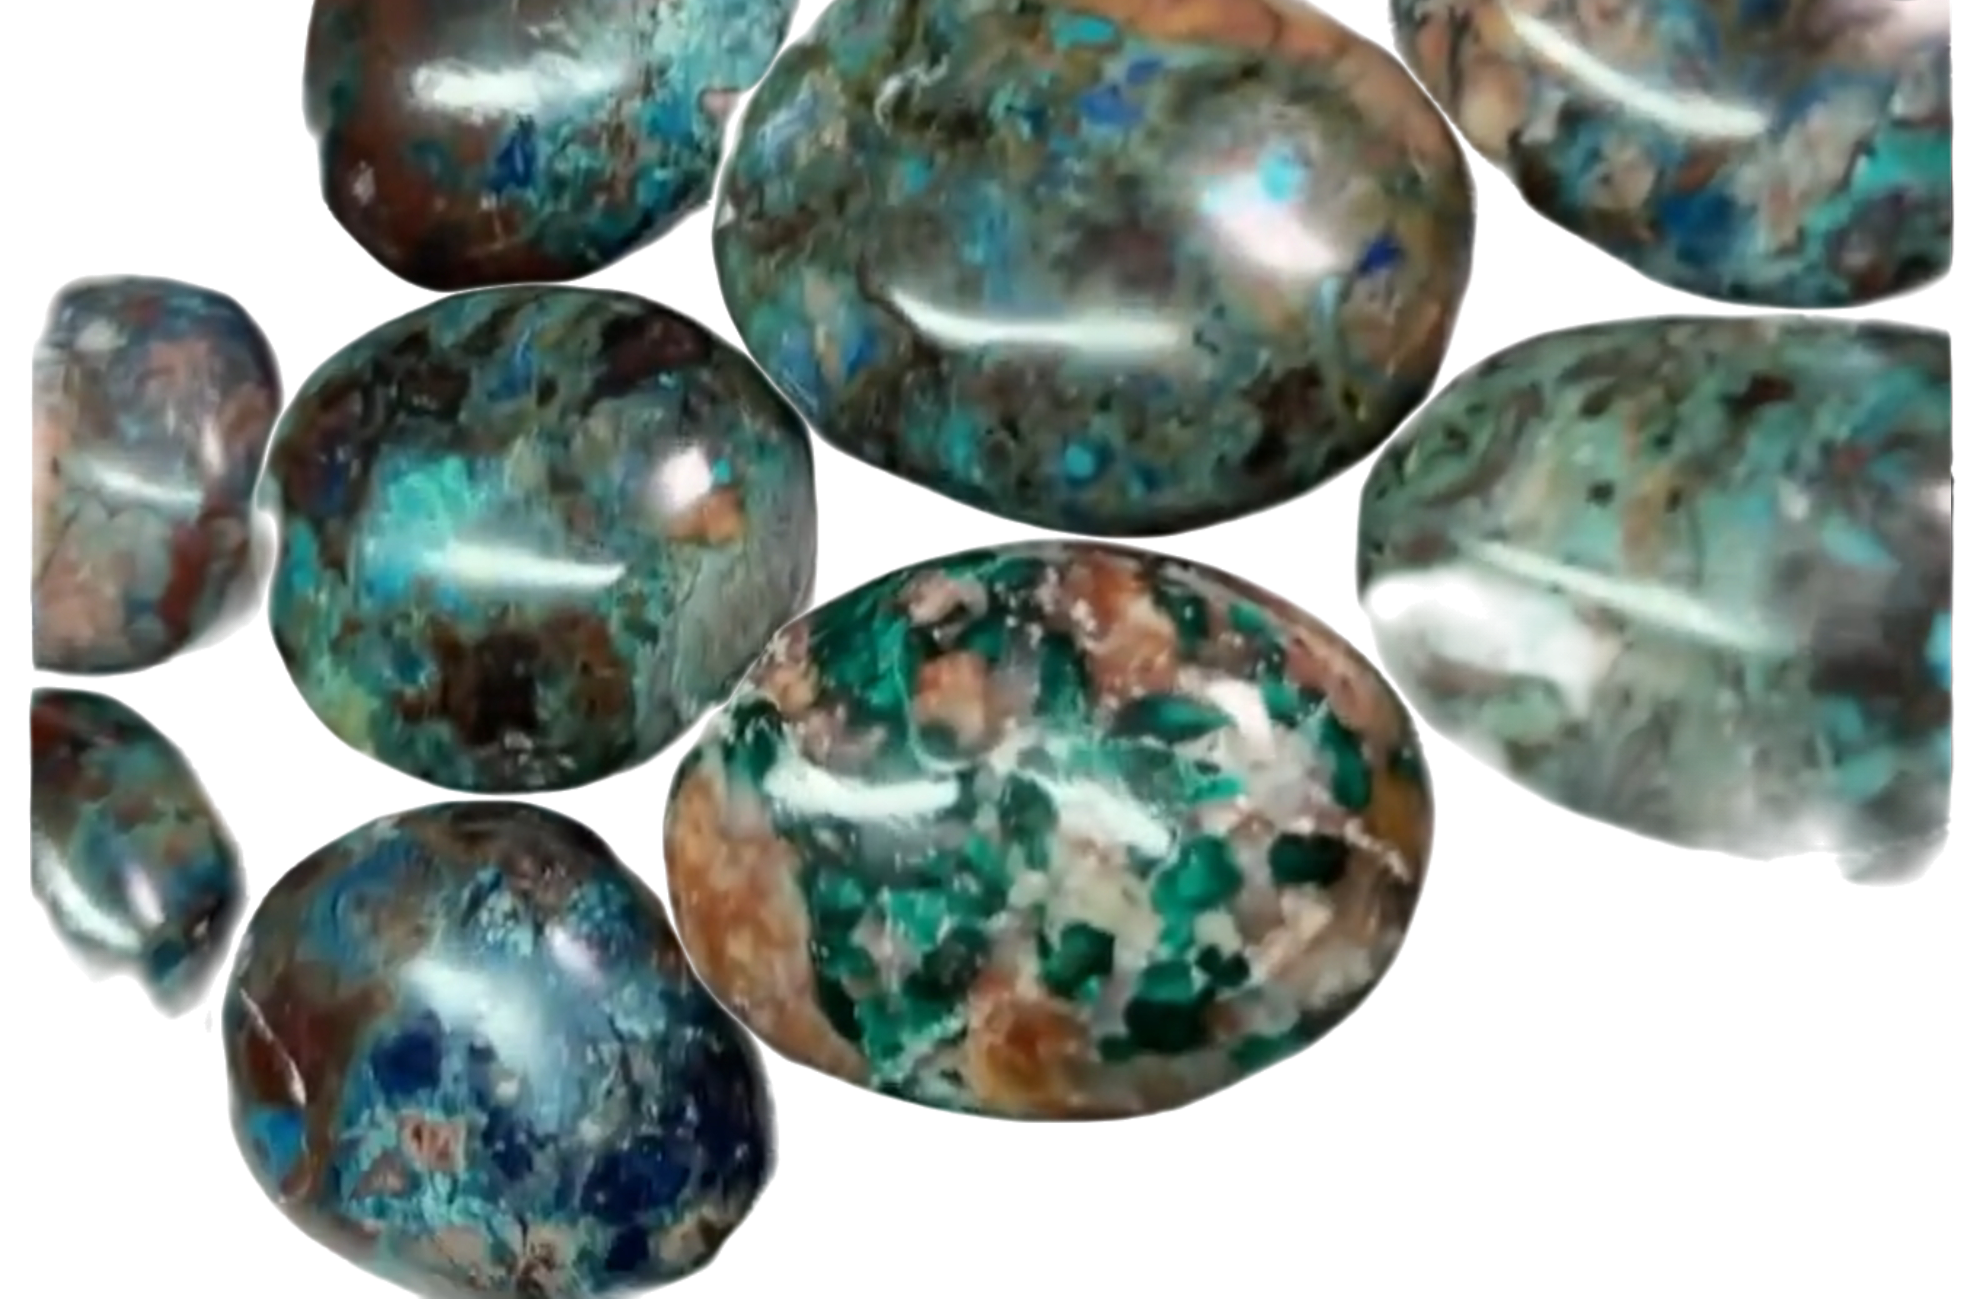 Rare Shattuckite Palm Stone! Pocket Crystal for Psychic Abilities